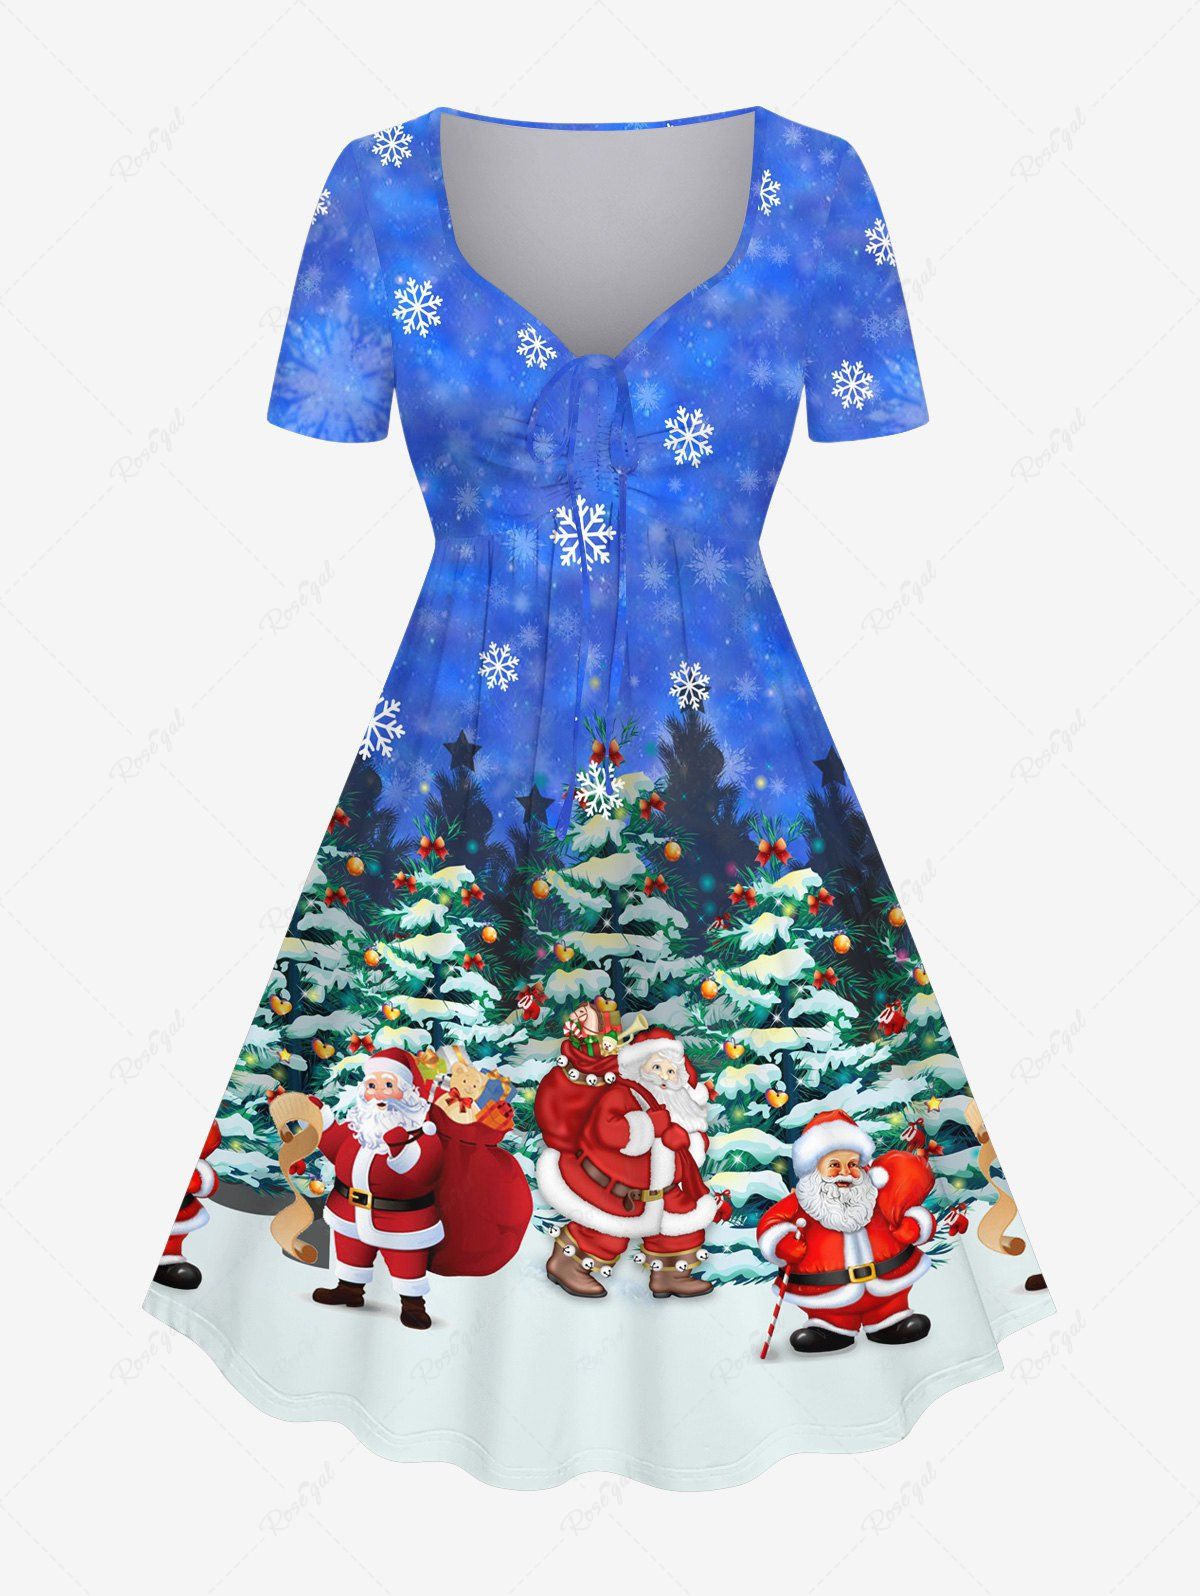 Hot Plus Size Christmas Tree Ball Santa Claus Sack Snowflake Galaxy Print Cinched Dress  